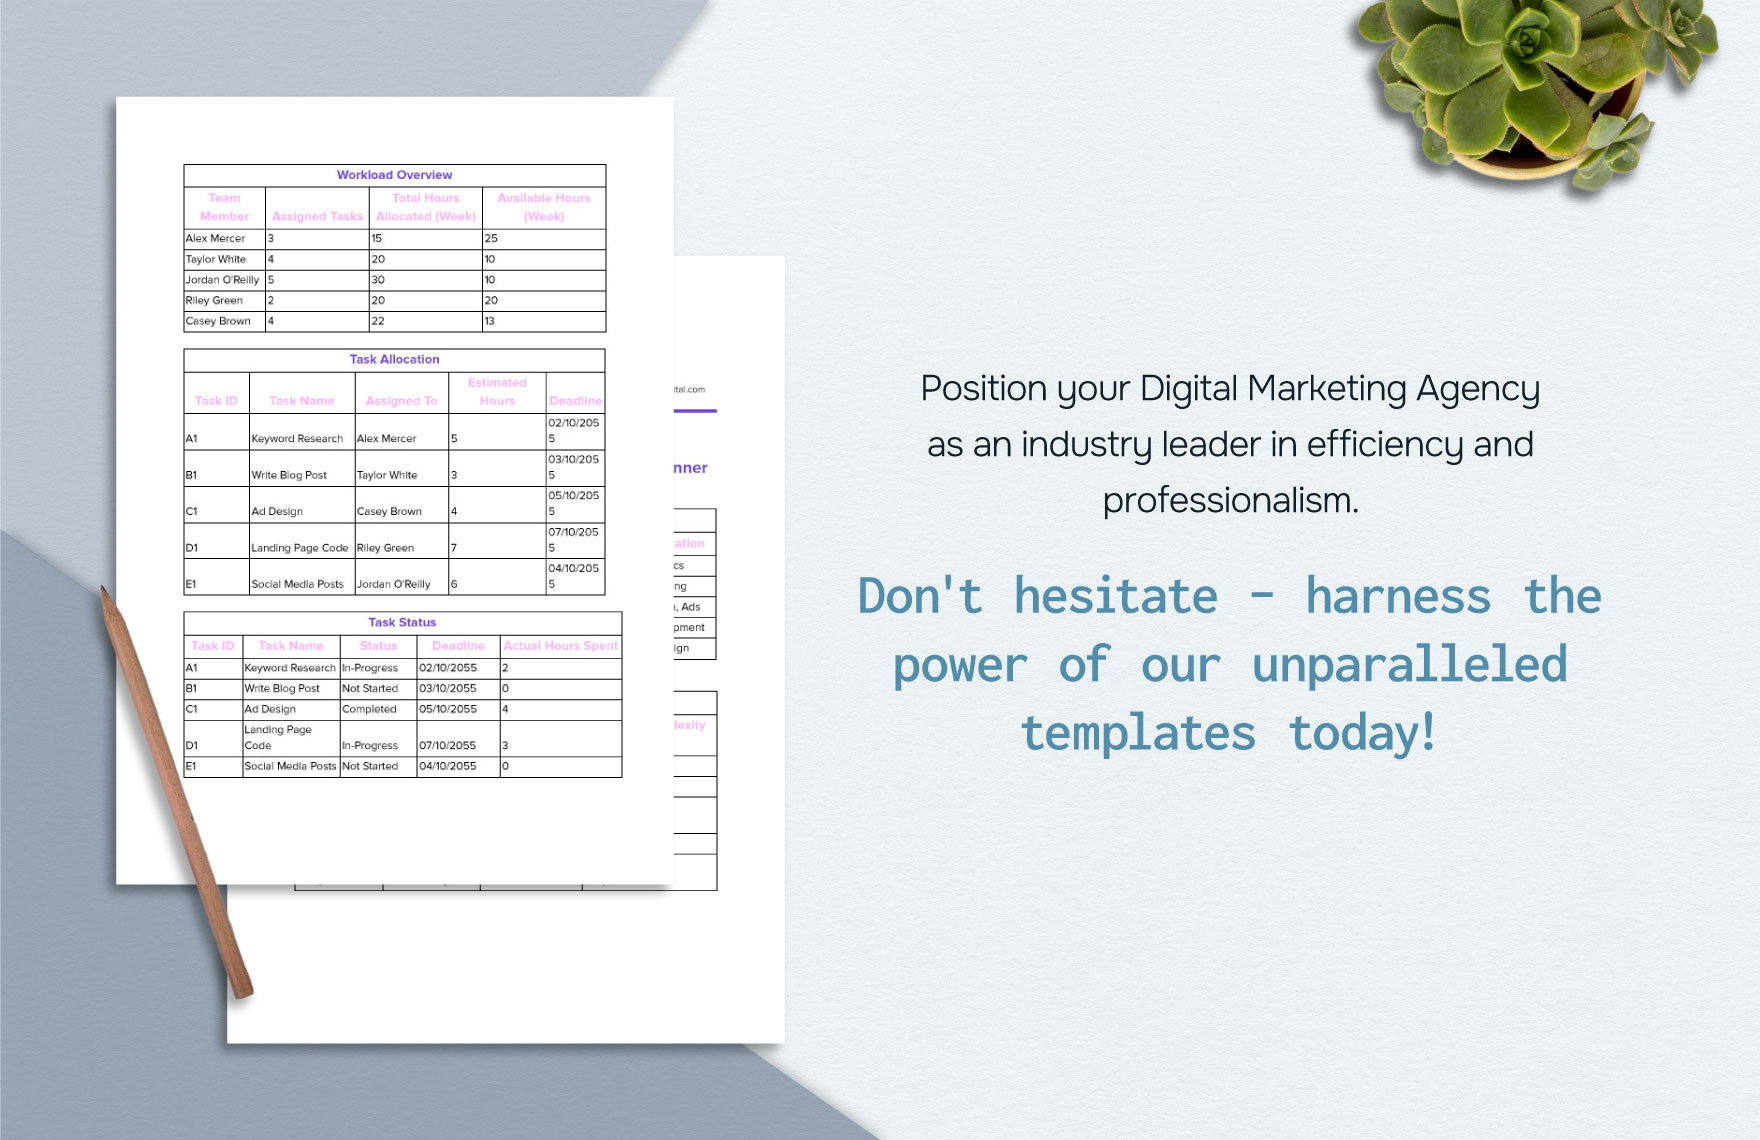 Digital Marketing Agency Workload Capacity Planner Template